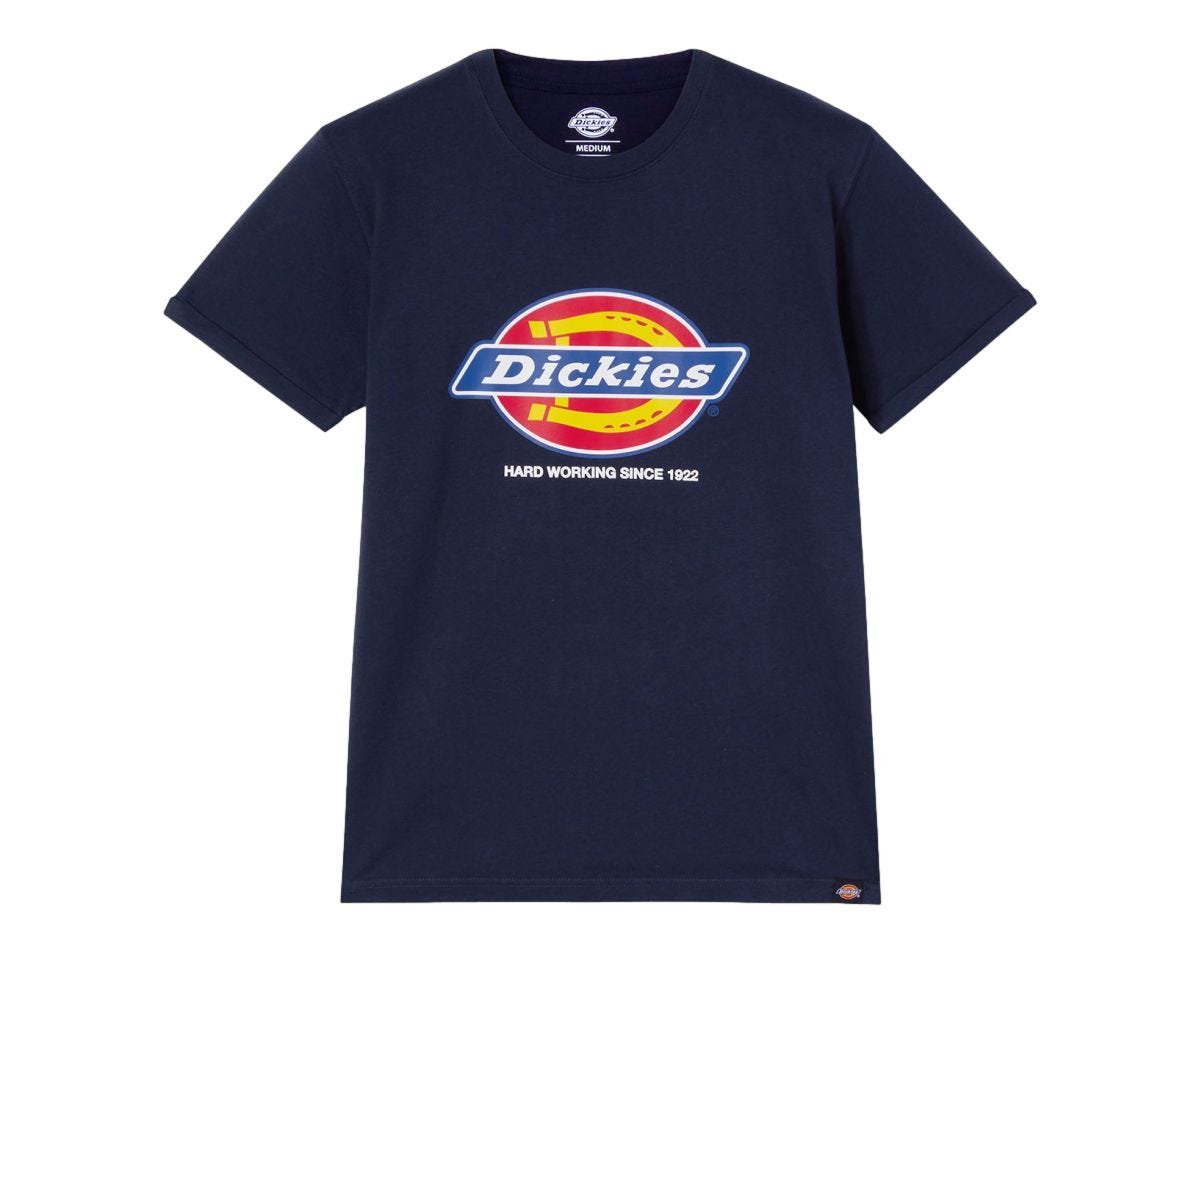 T-shirt de travail Denison bleu marine - Dickies - Taille XL 1